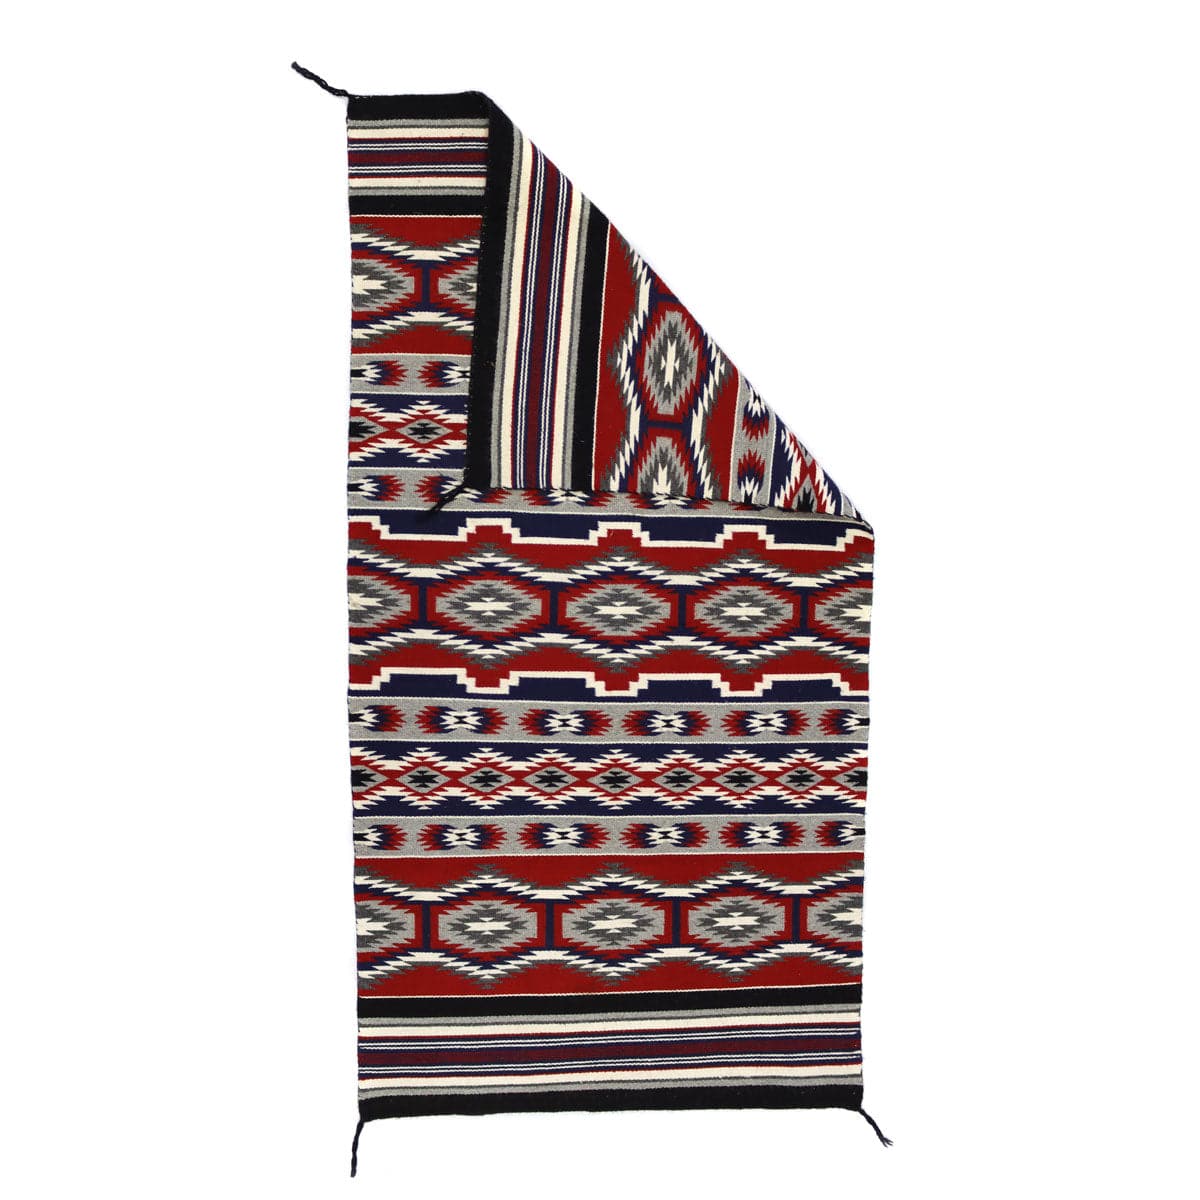 Navajo Contemporary Revival Blanket c. 1980-90s, 55.5" x 29" (T91051-0821-008)2